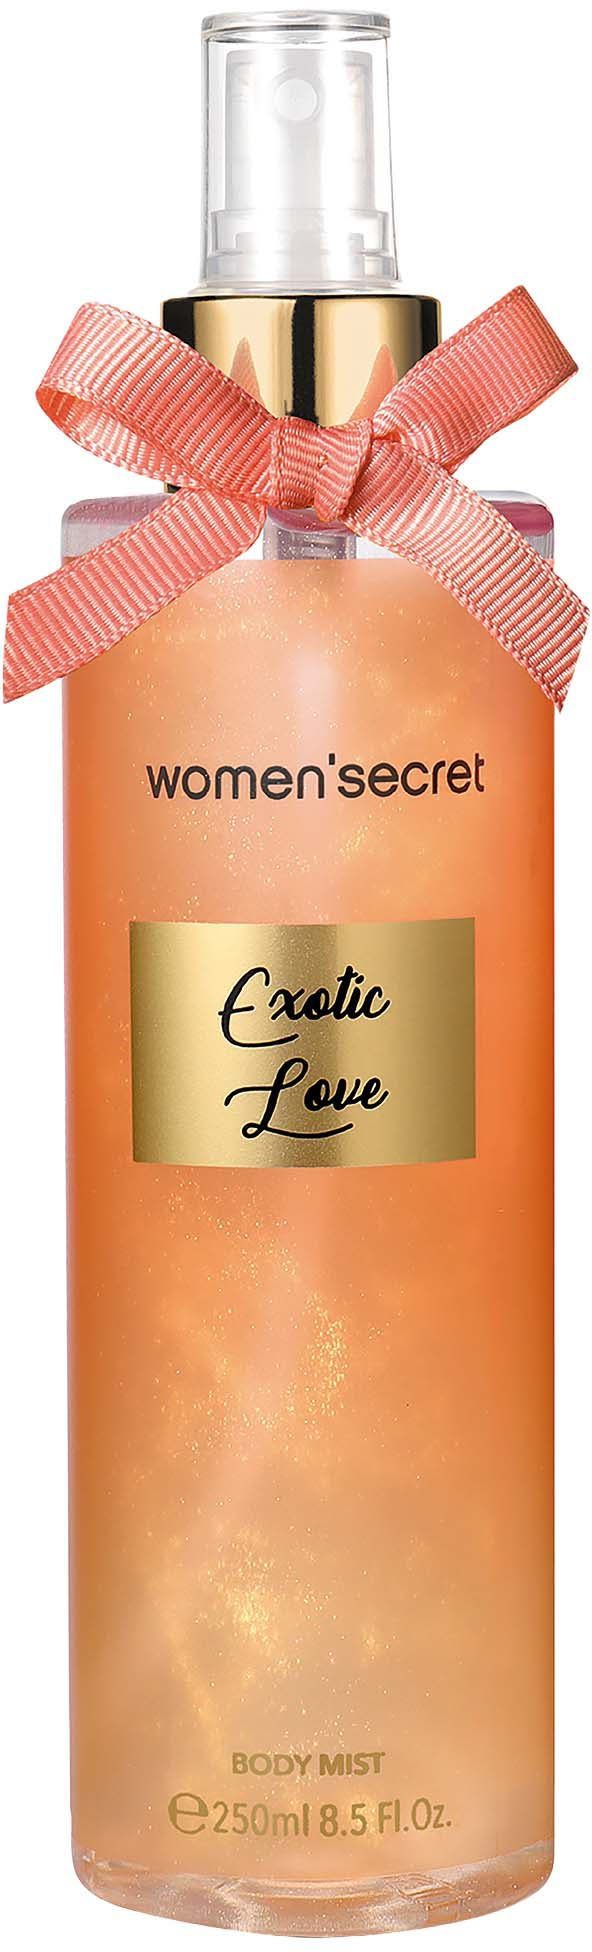 women'secret Körperspray Body Mist - Exotic Love